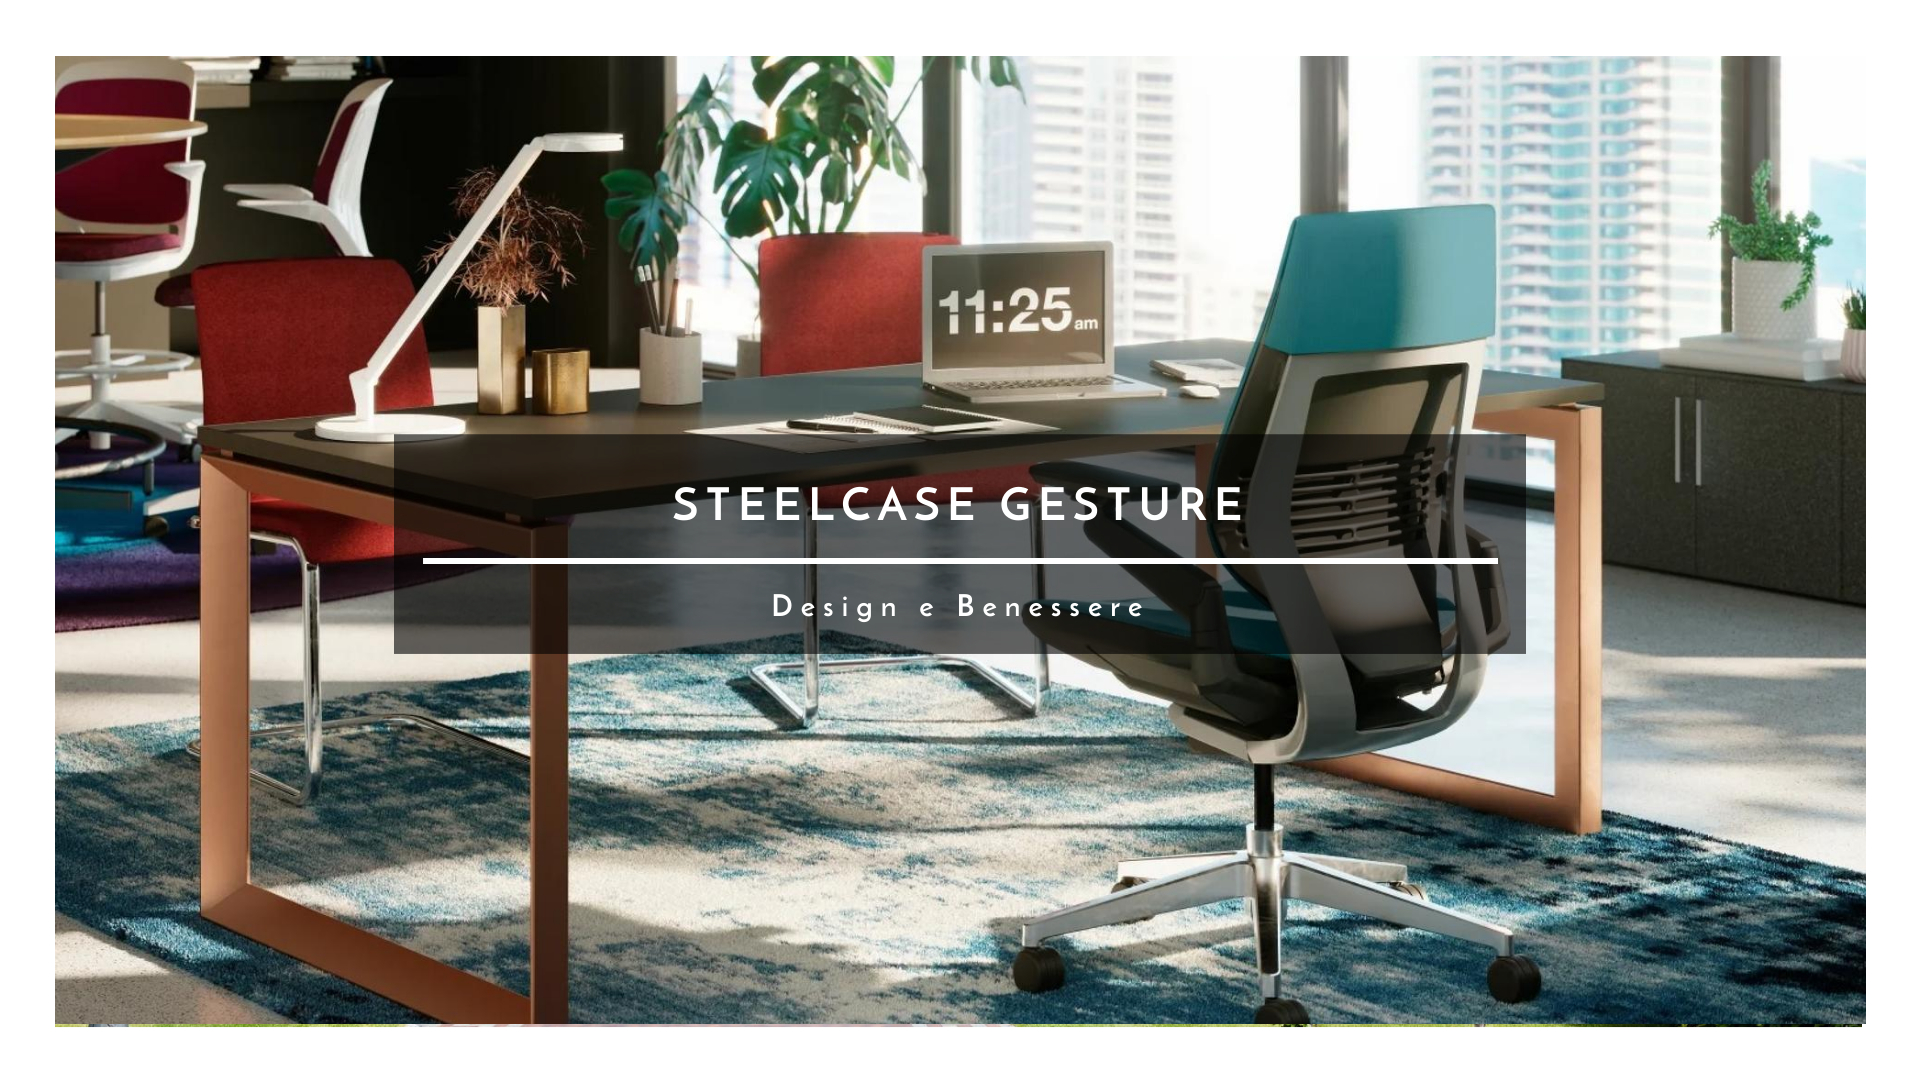 Steelcase GESTURE - Tra Design e Benessere